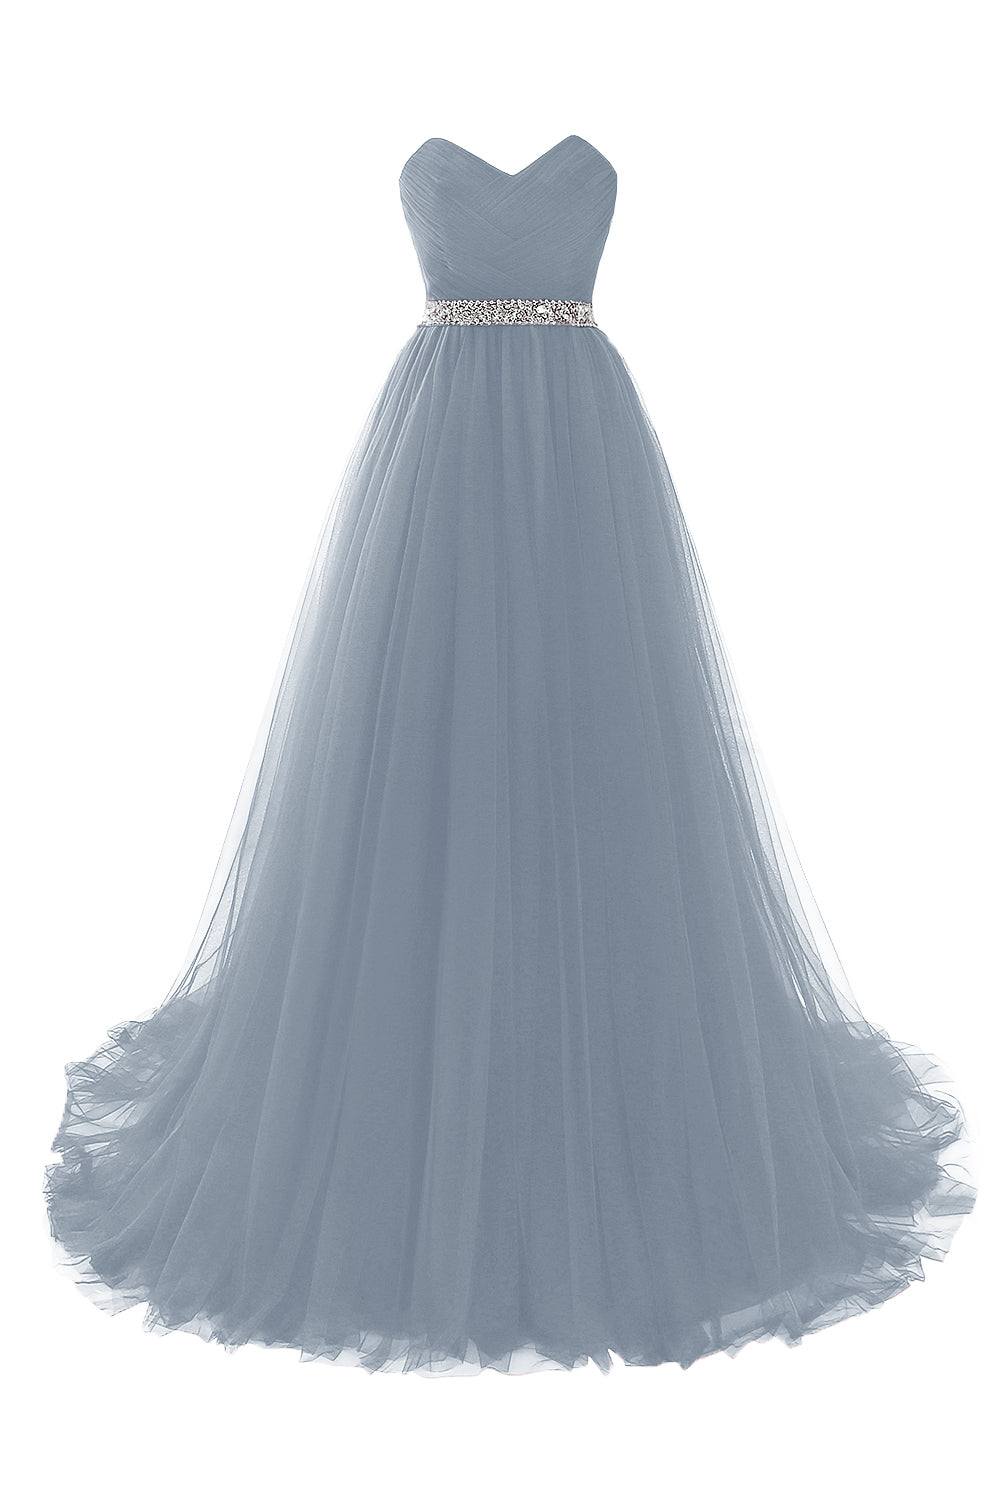 Elegant Burgundy Tulle Evening Dresses | Long Crystal Prom Gowns